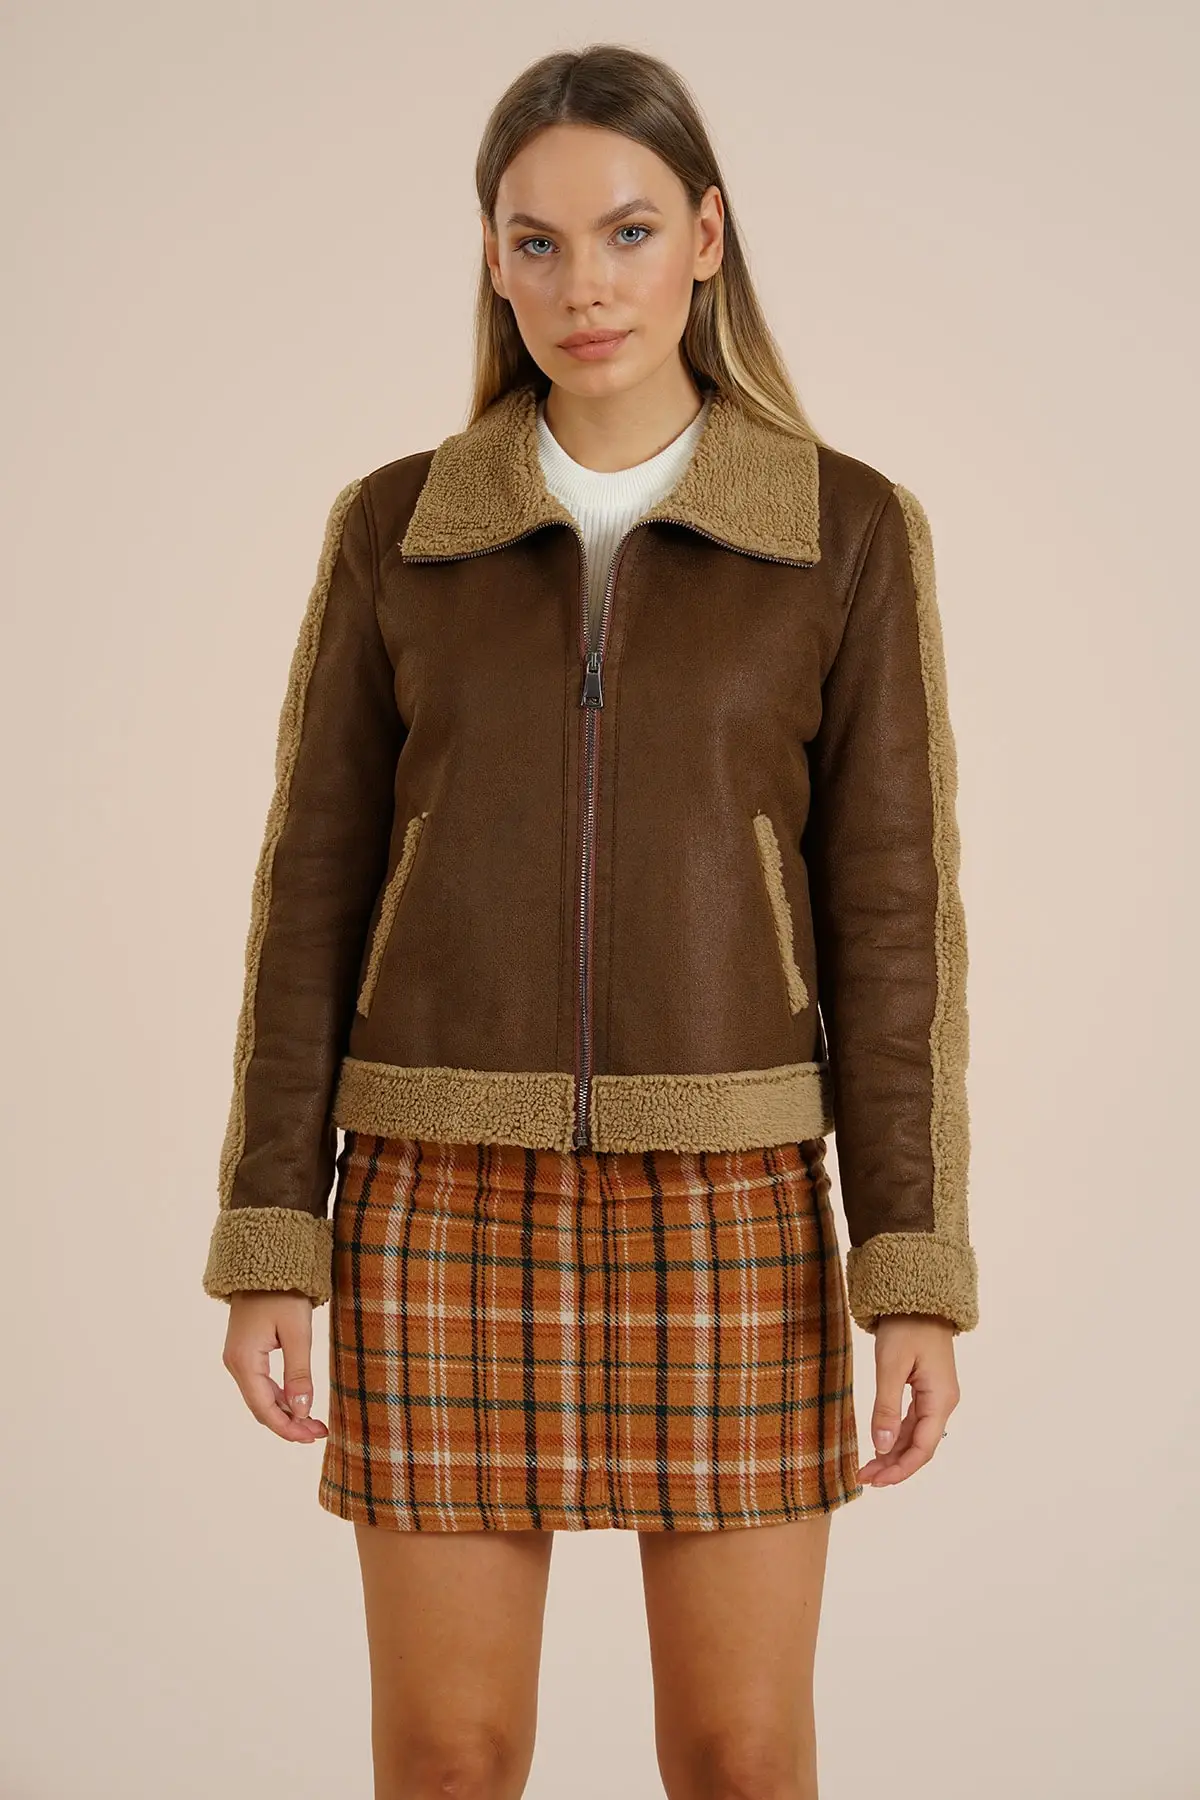 Women Jacket Brown Faux Fur Suede Long Sleeve Pocket Collar Thick Stylish Elegant 2021 Winter Autumn Fashion Outerwear Coats